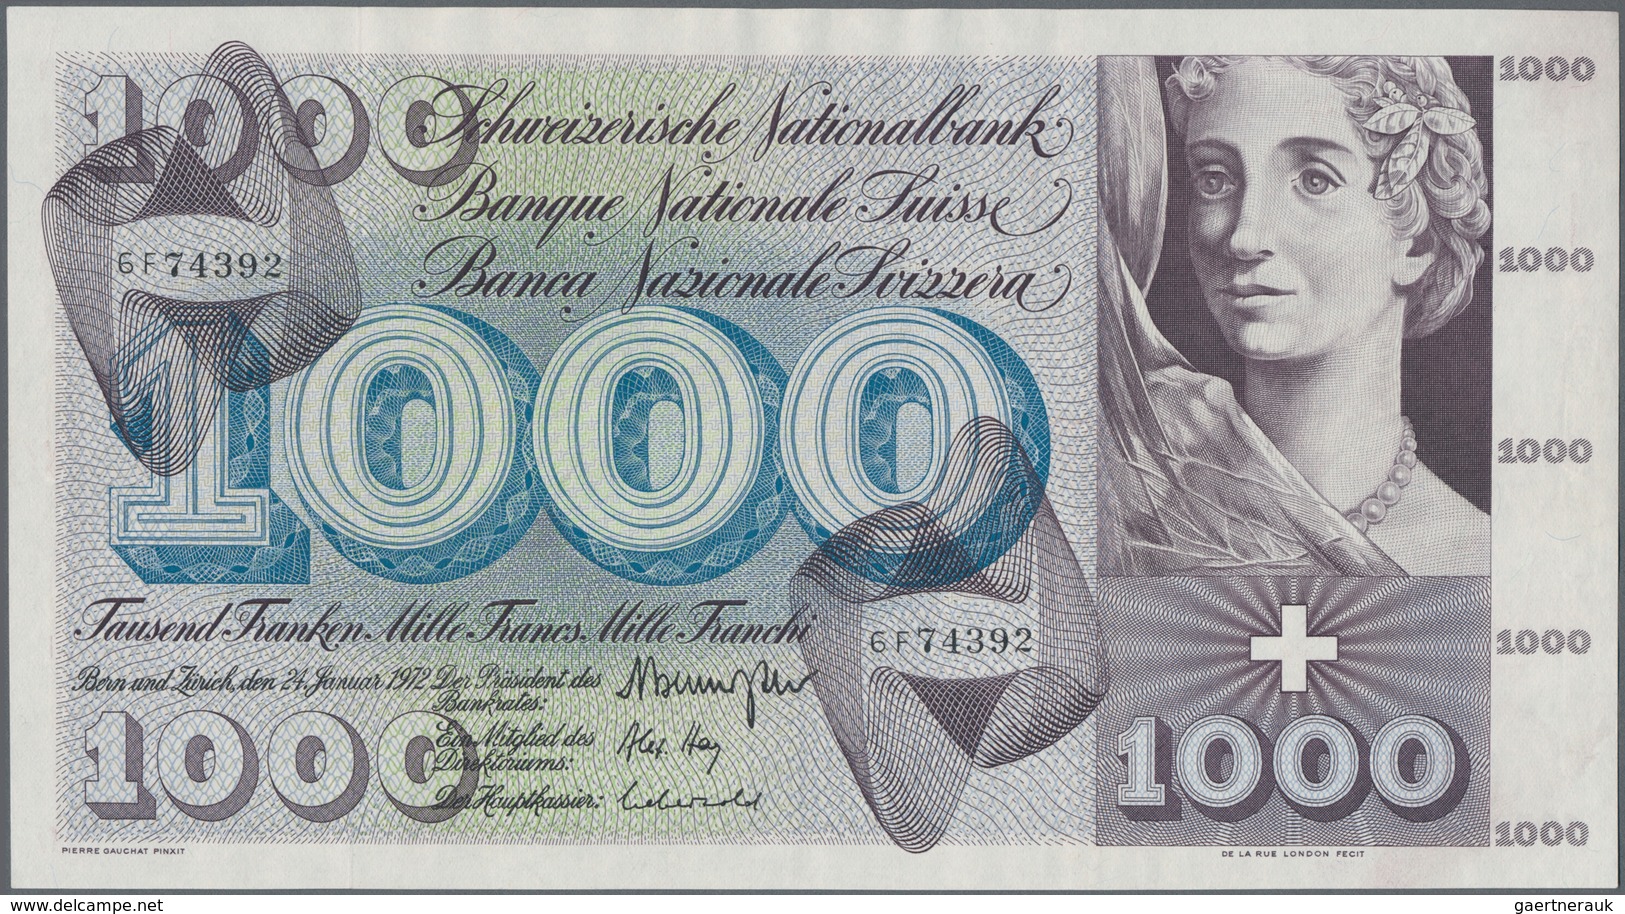 Europa: Huge collectors album with 446 banknotes Europe, comprising for example Yugoslavia 50 Kruna